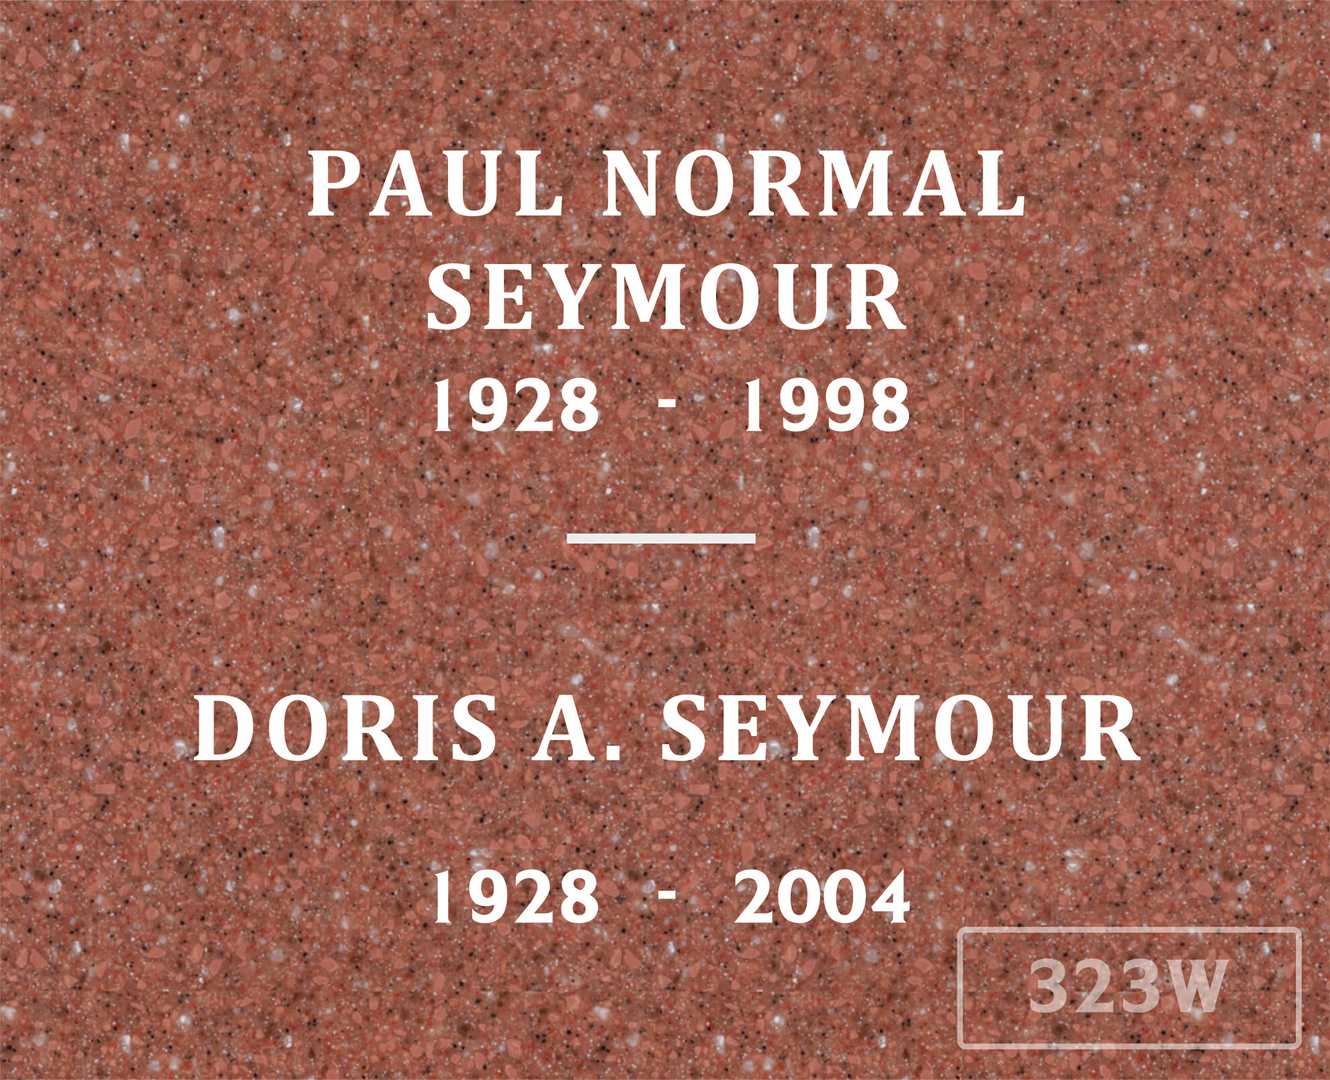 Paul Normal Seymour's grave